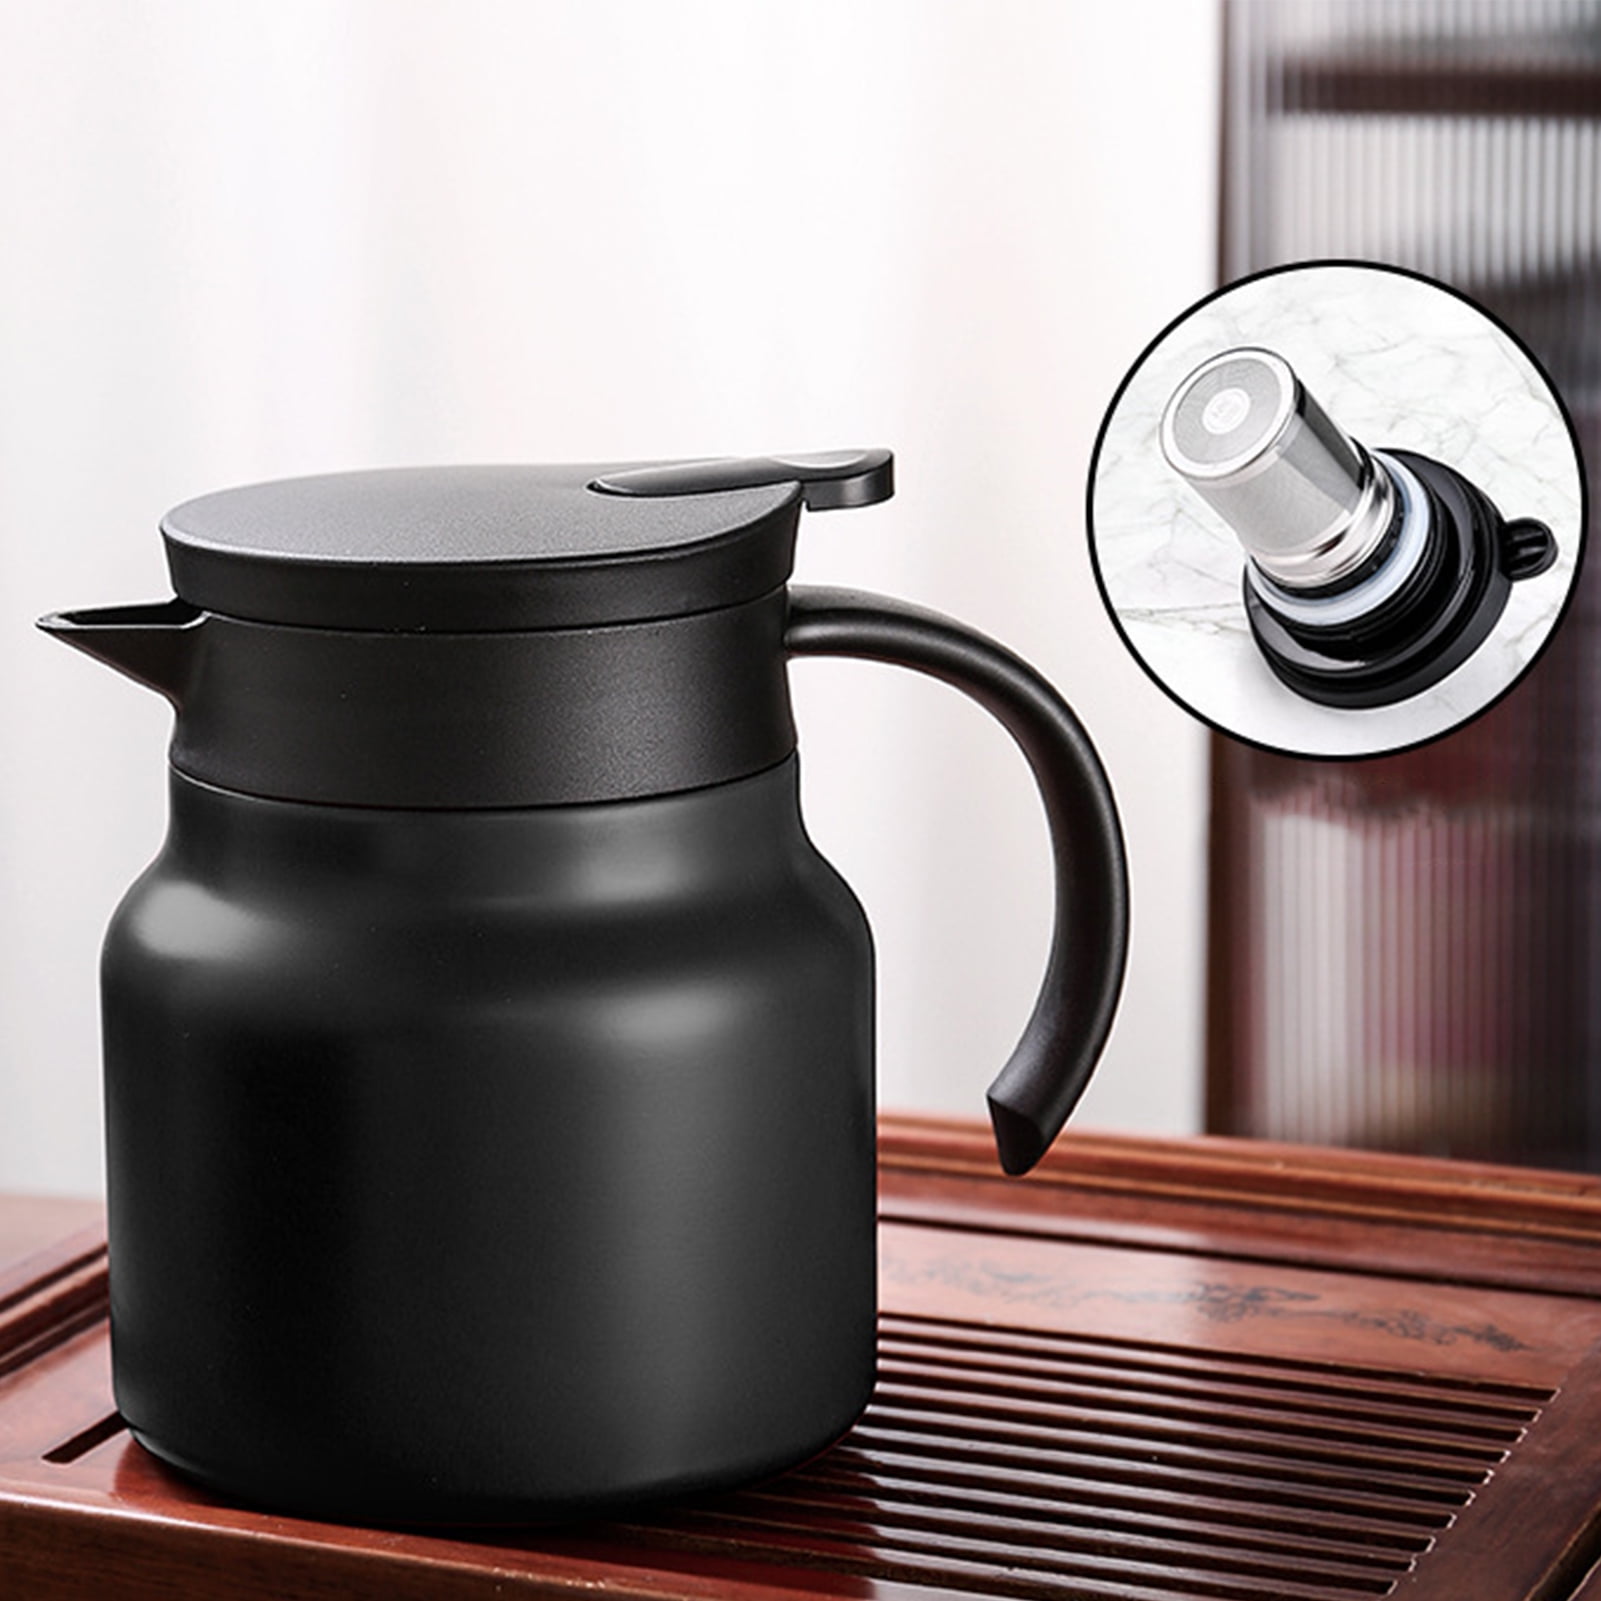 OGGI Stainless Steel Tea Kettle for Stove Top - 85oz